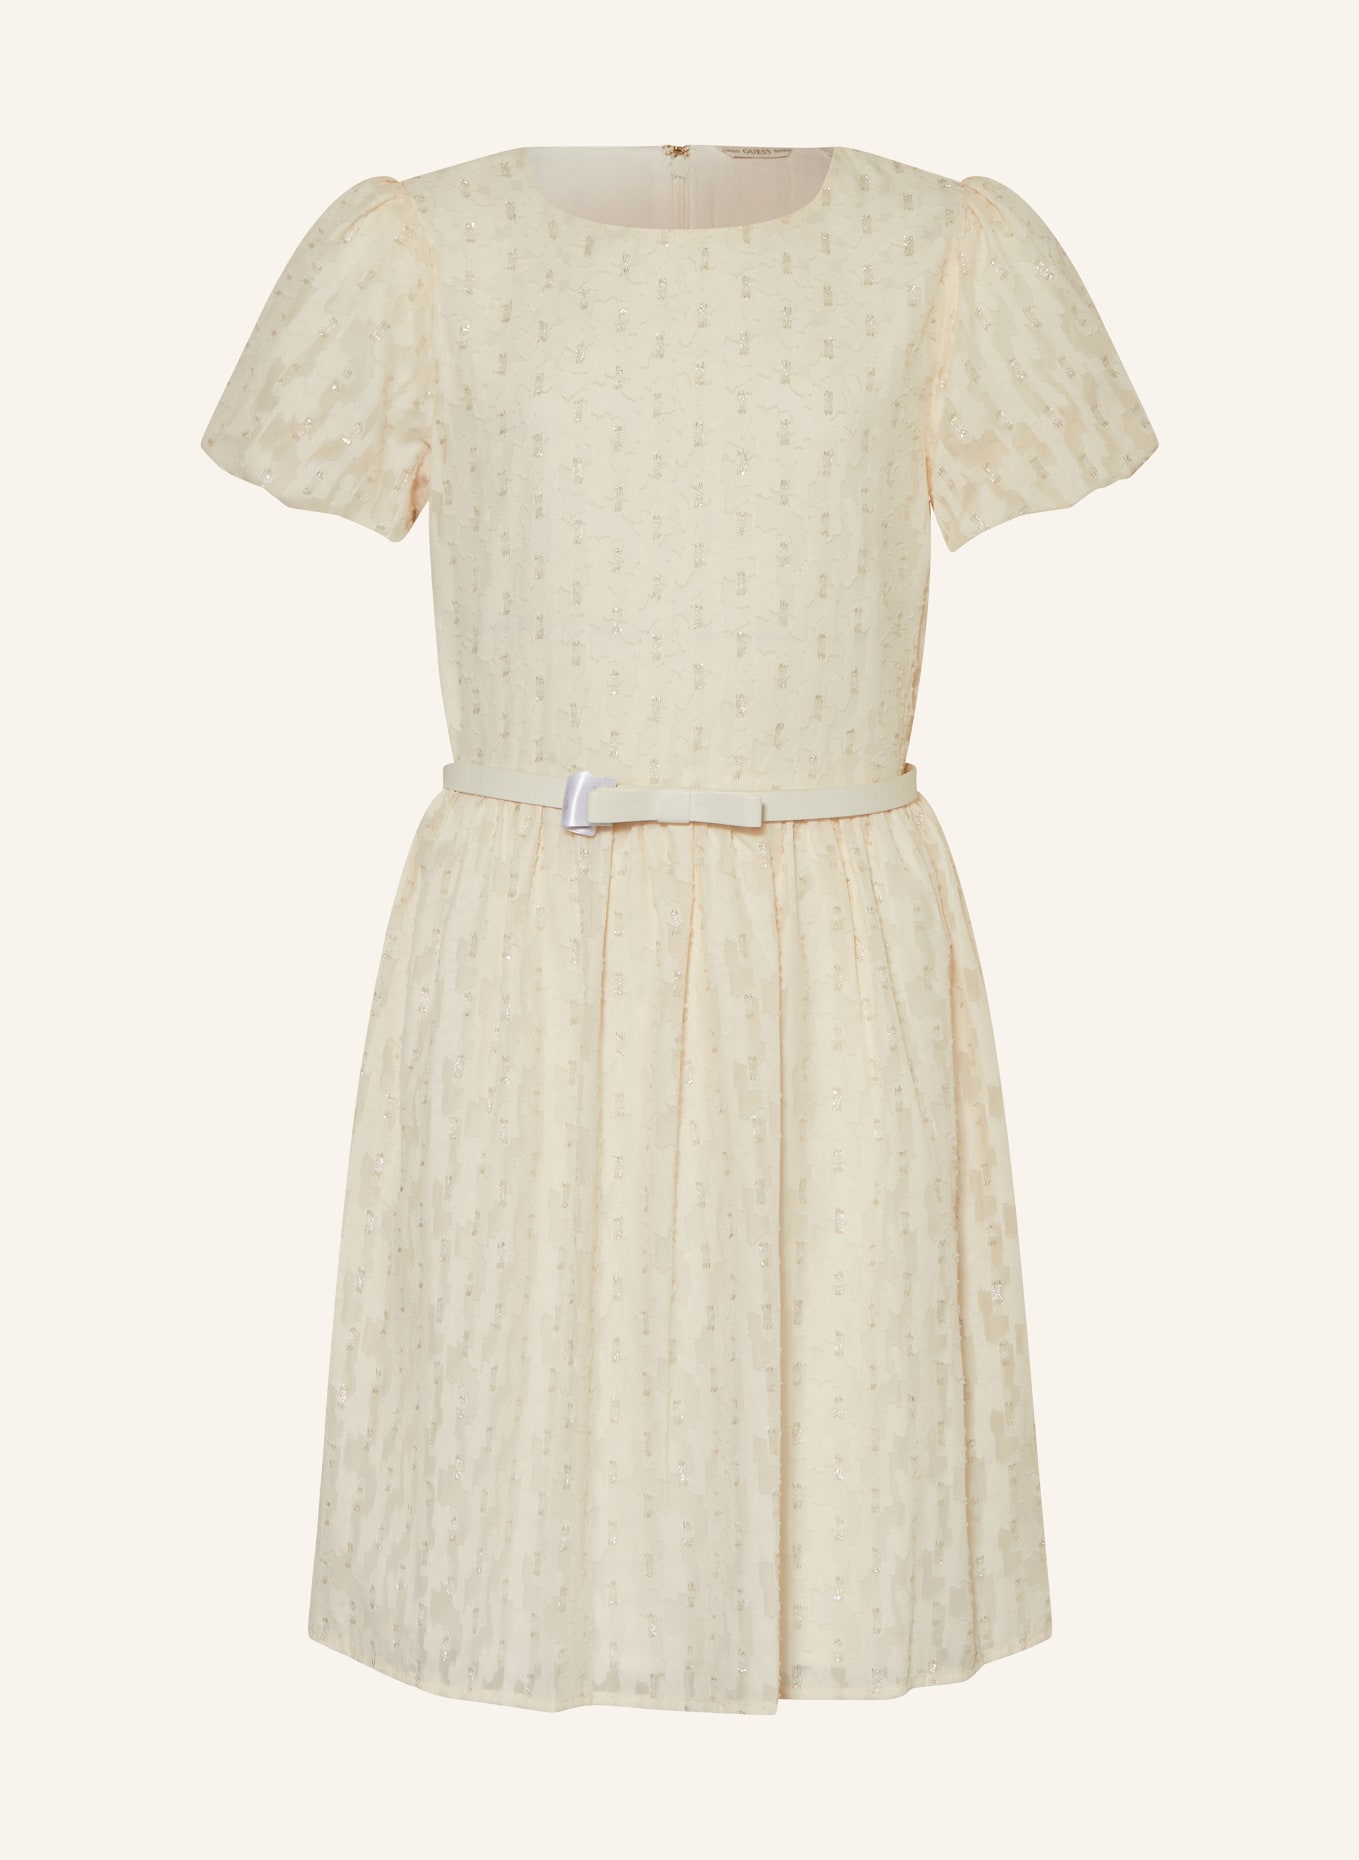 GUESS Kleid mit Glitzergarn, Farbe: ECRU (Bild 1)